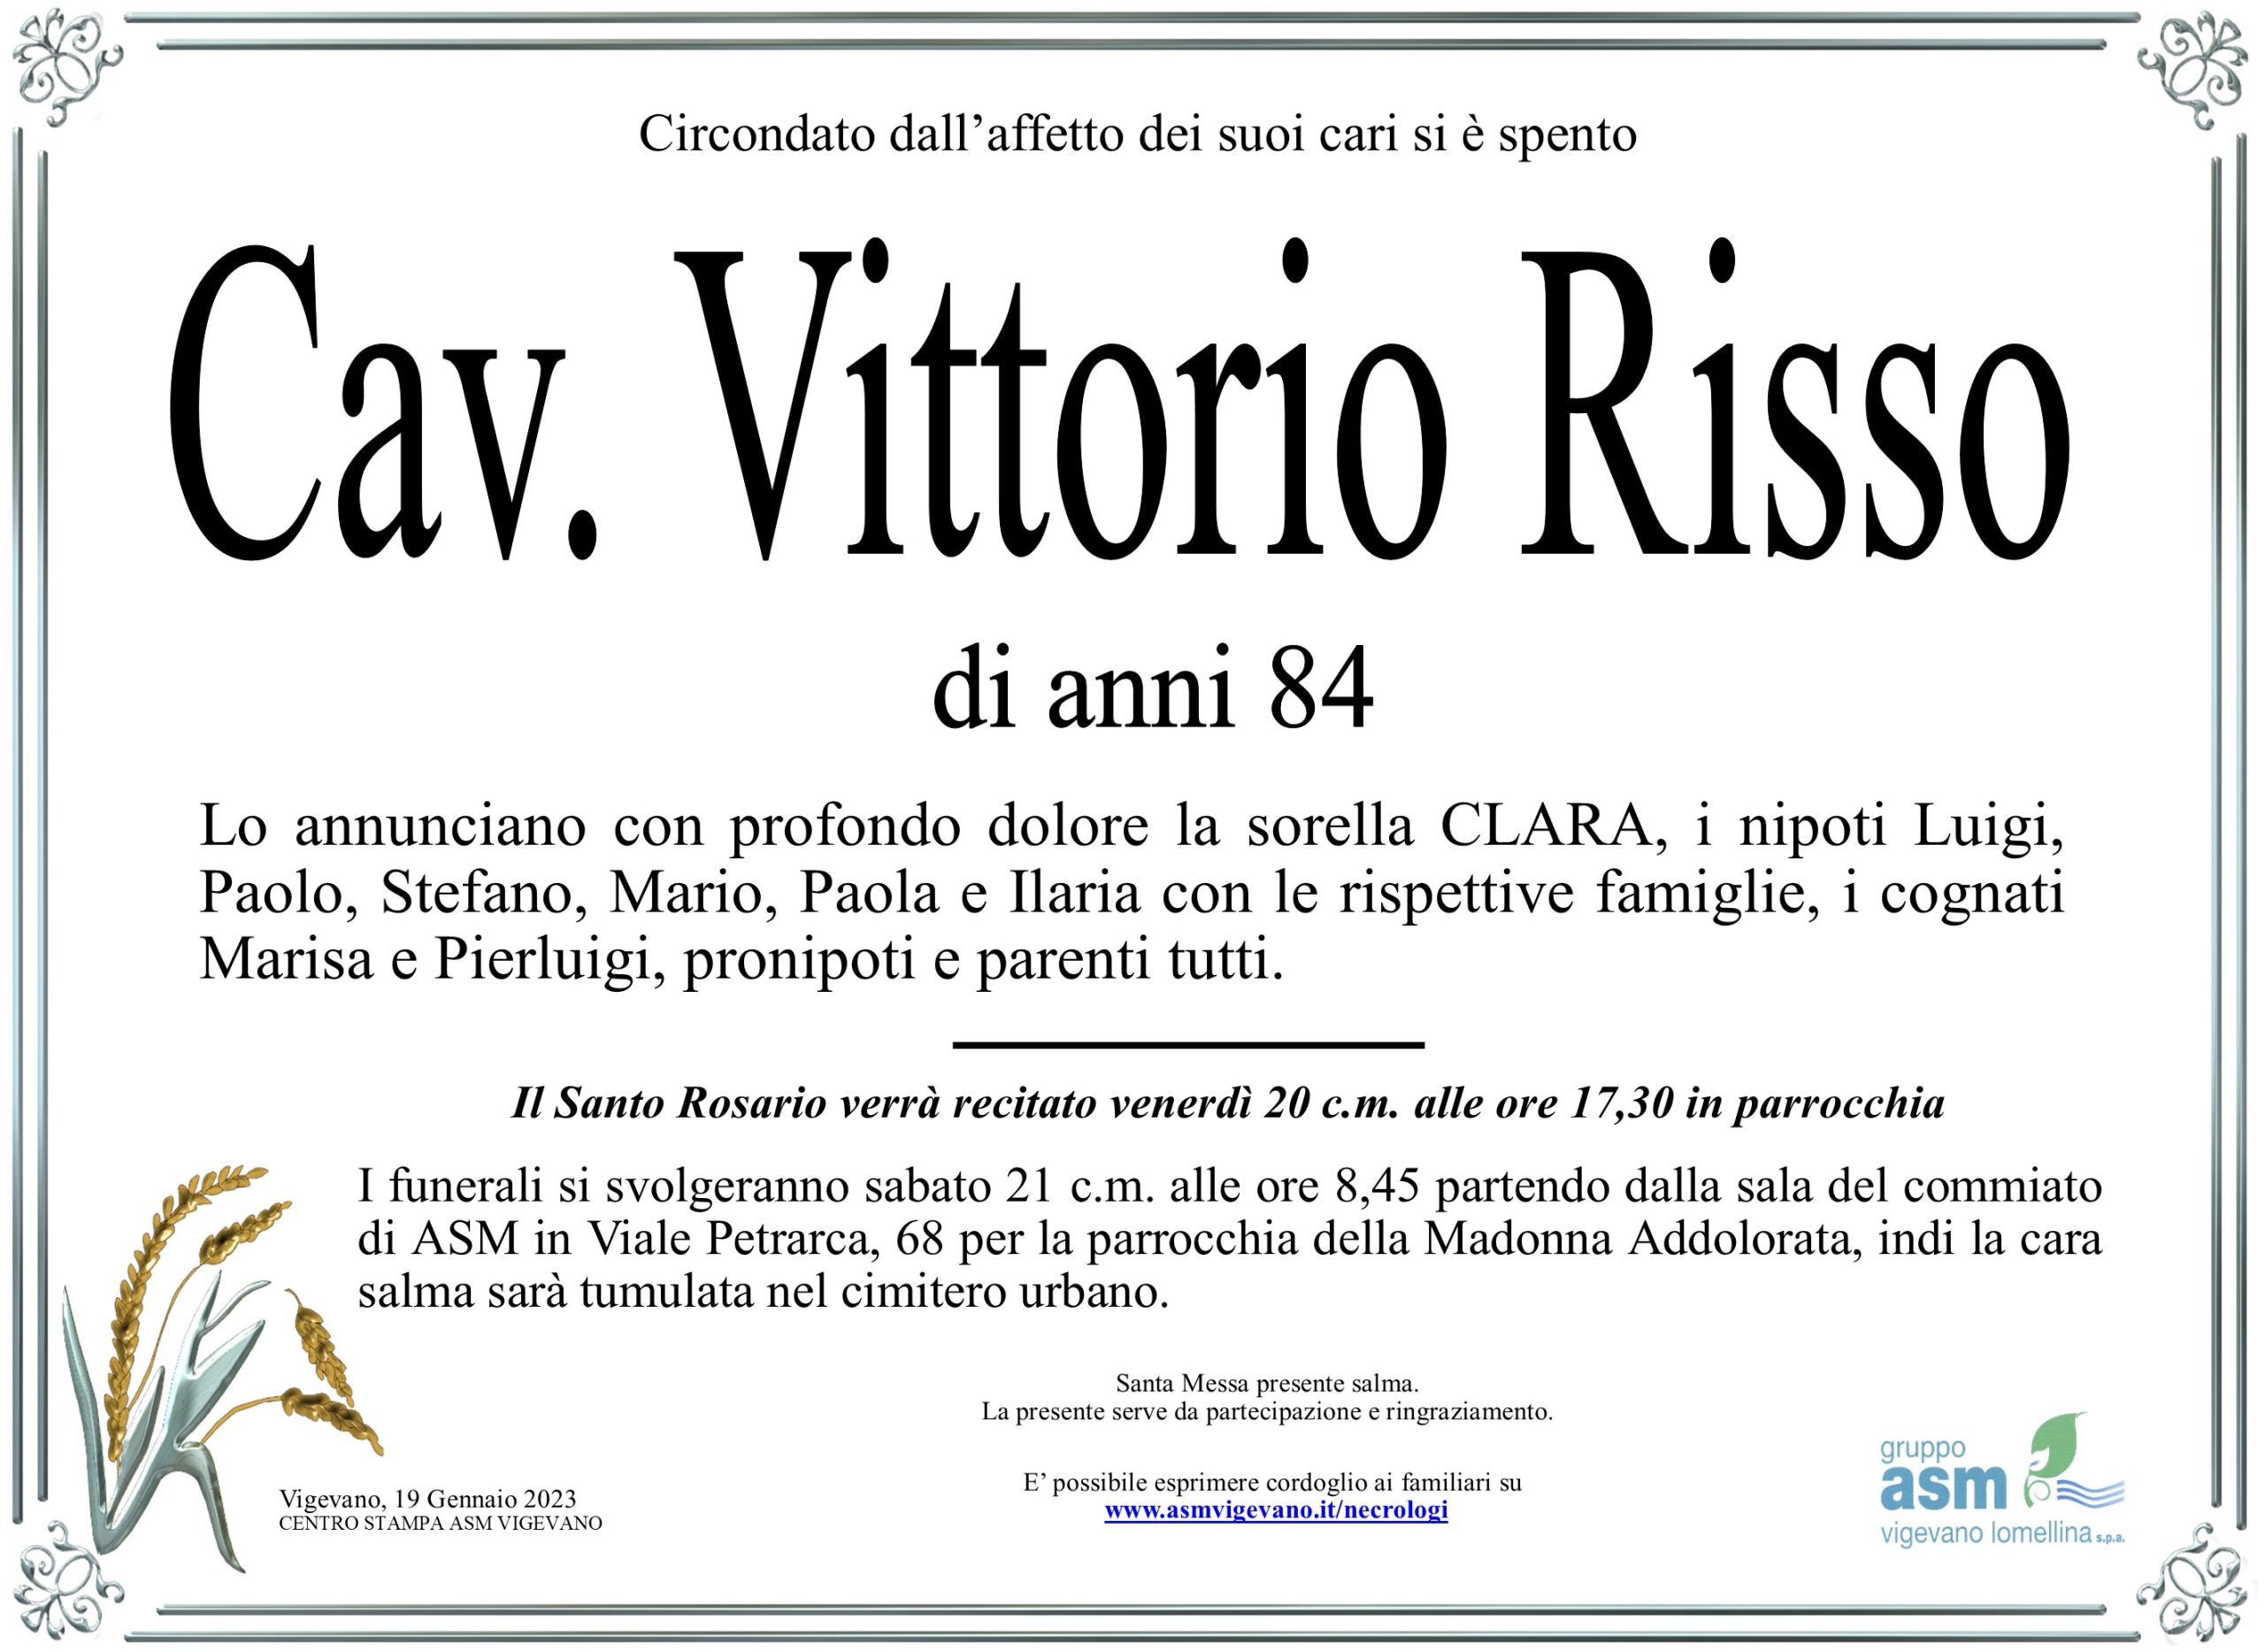 Cav. Vittorio Risso